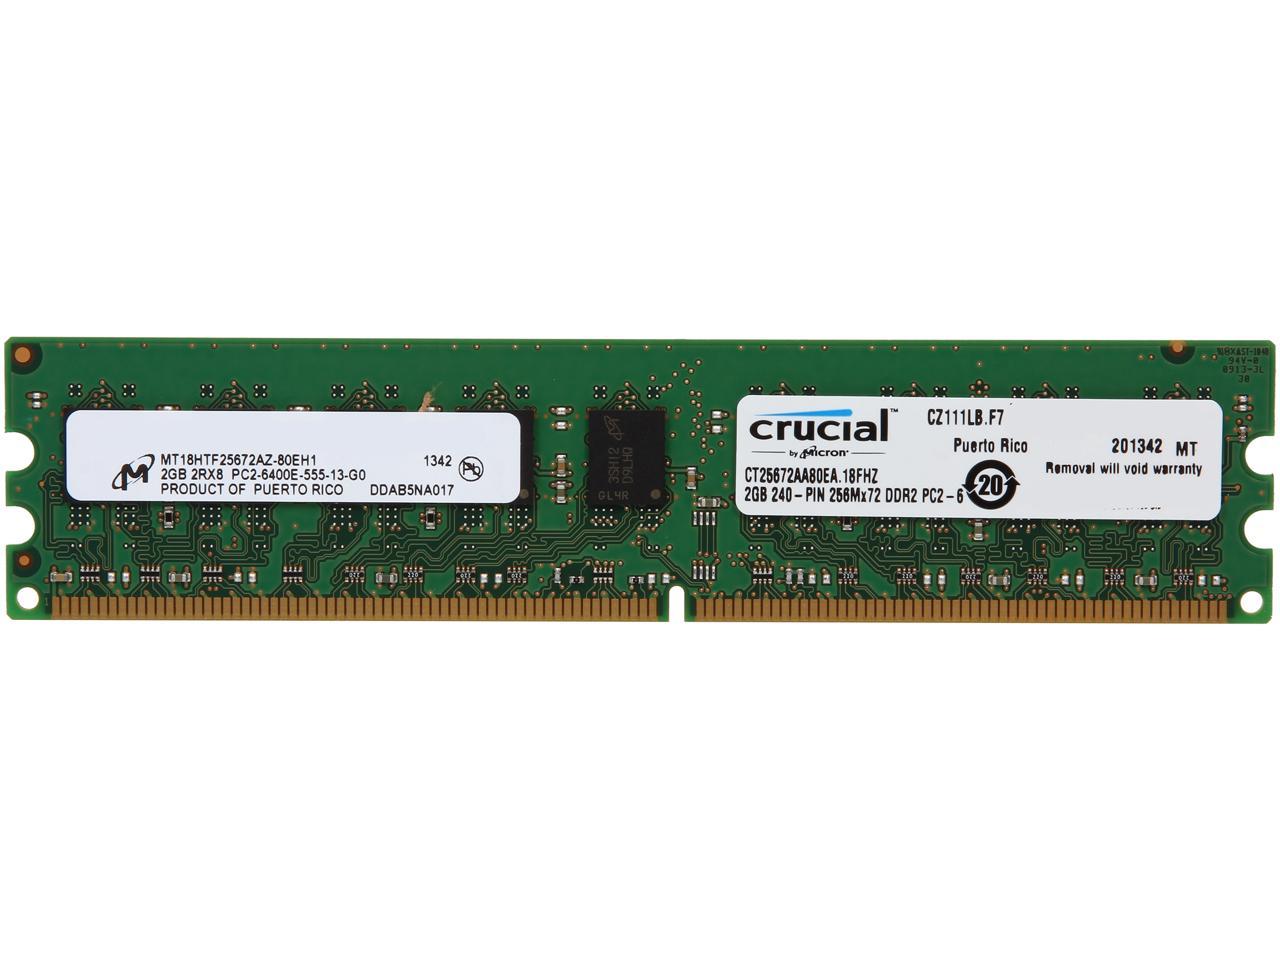 Micron 4GB 2x2GB PC2-6400E MT18HTF25672AZ-80EH1 Crucial CT25672AA80EA.18FHZ RAM 